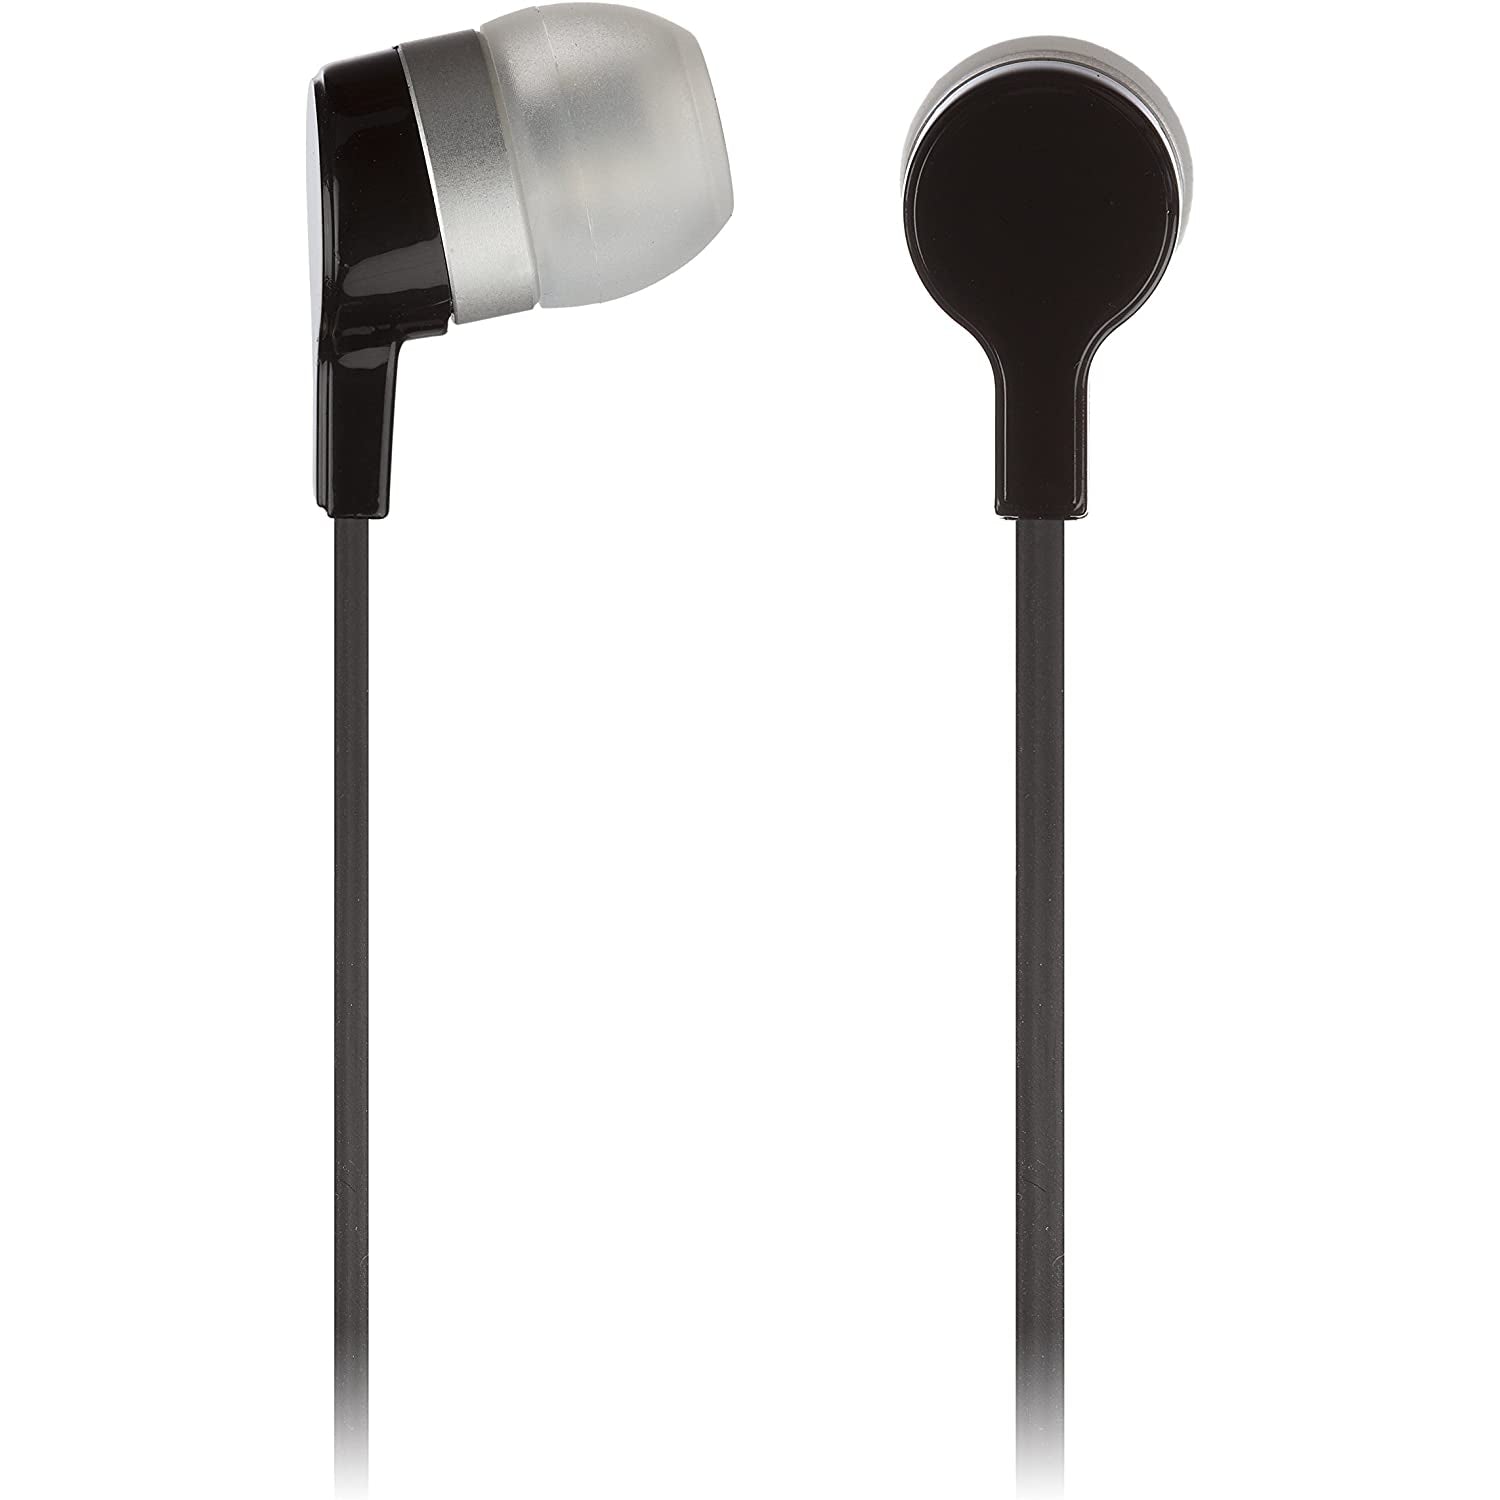 KitSound Mini In-Ear Headphones with In-Line Mic - Black - Refurbished Pristine